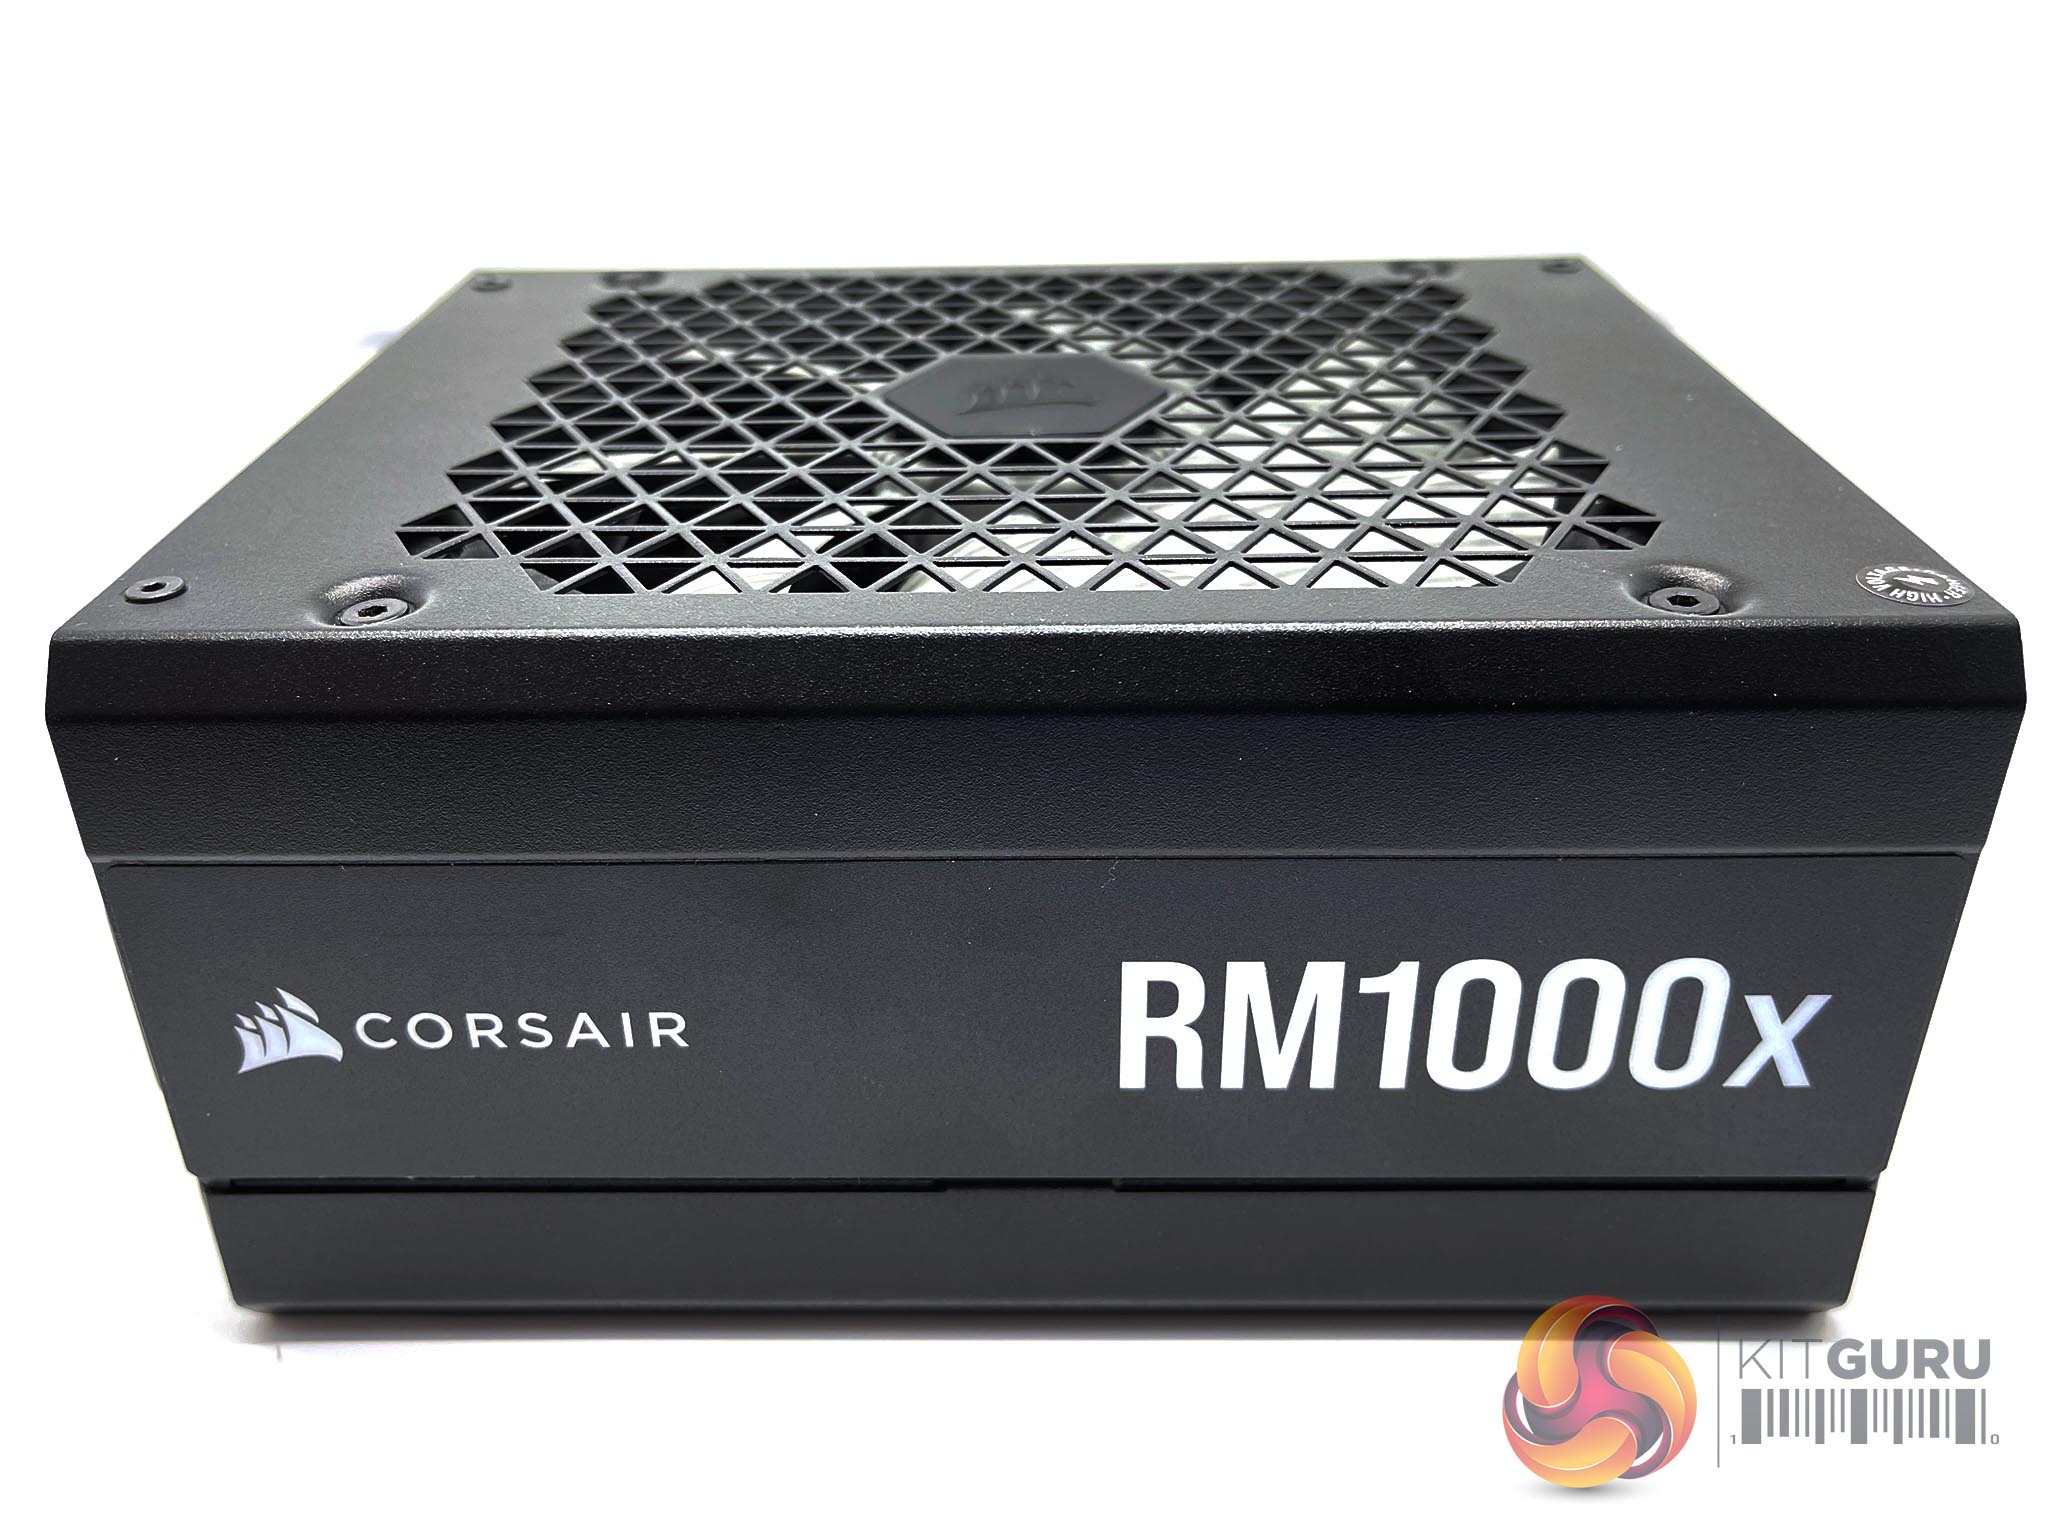 CORSAIR RM1000x Fully Modular ATX Power Supply Unit with 80 PLUS